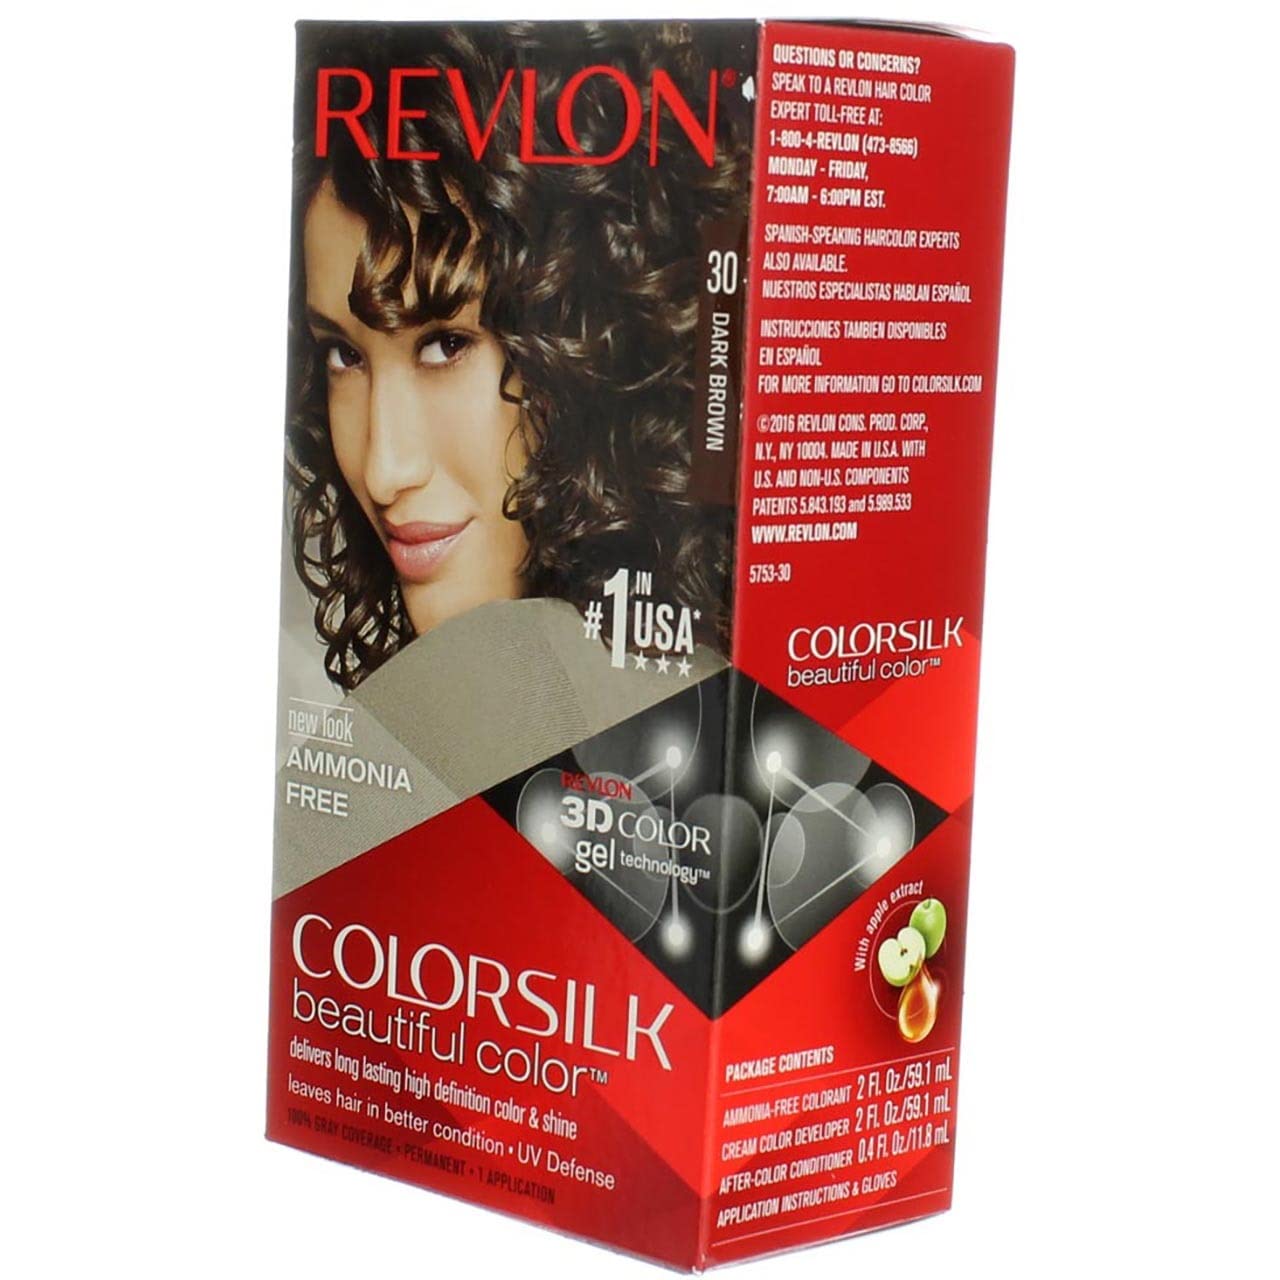 Revlon ColorSilk No.30 Dark Brown Ammonia Free